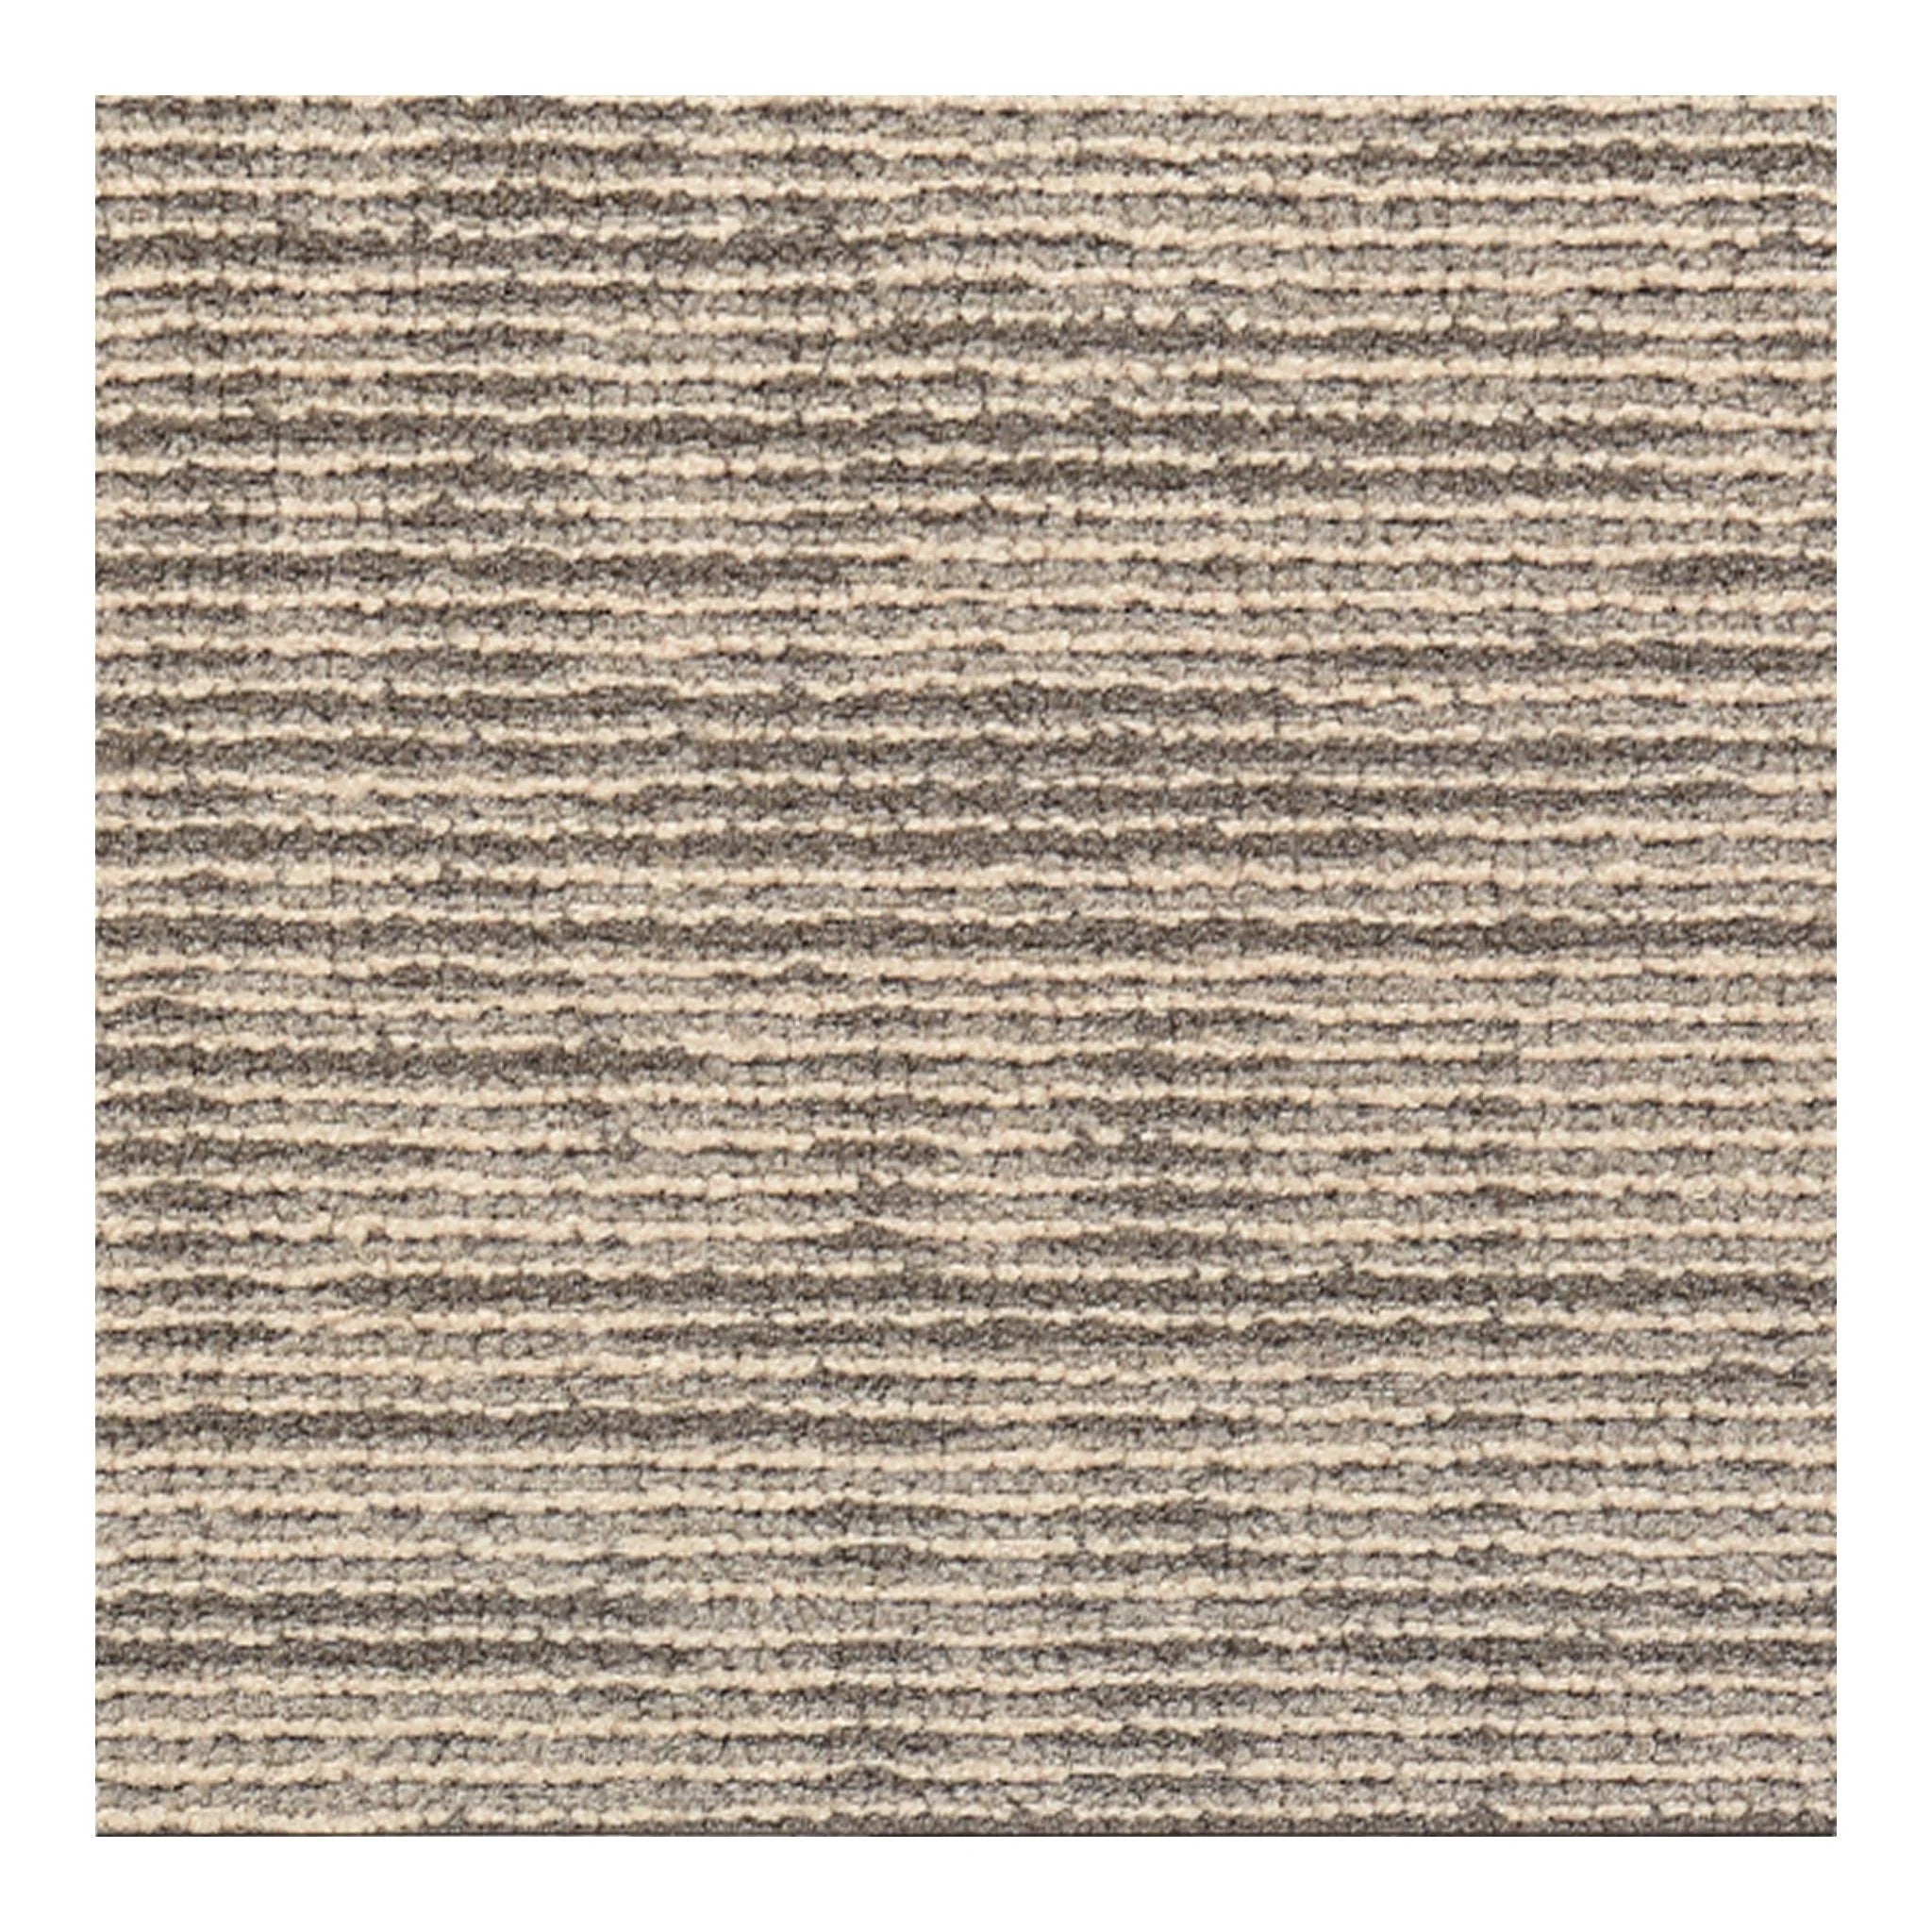 detailed view of beige wood-effect vinyl flooring with subtle grain patterns